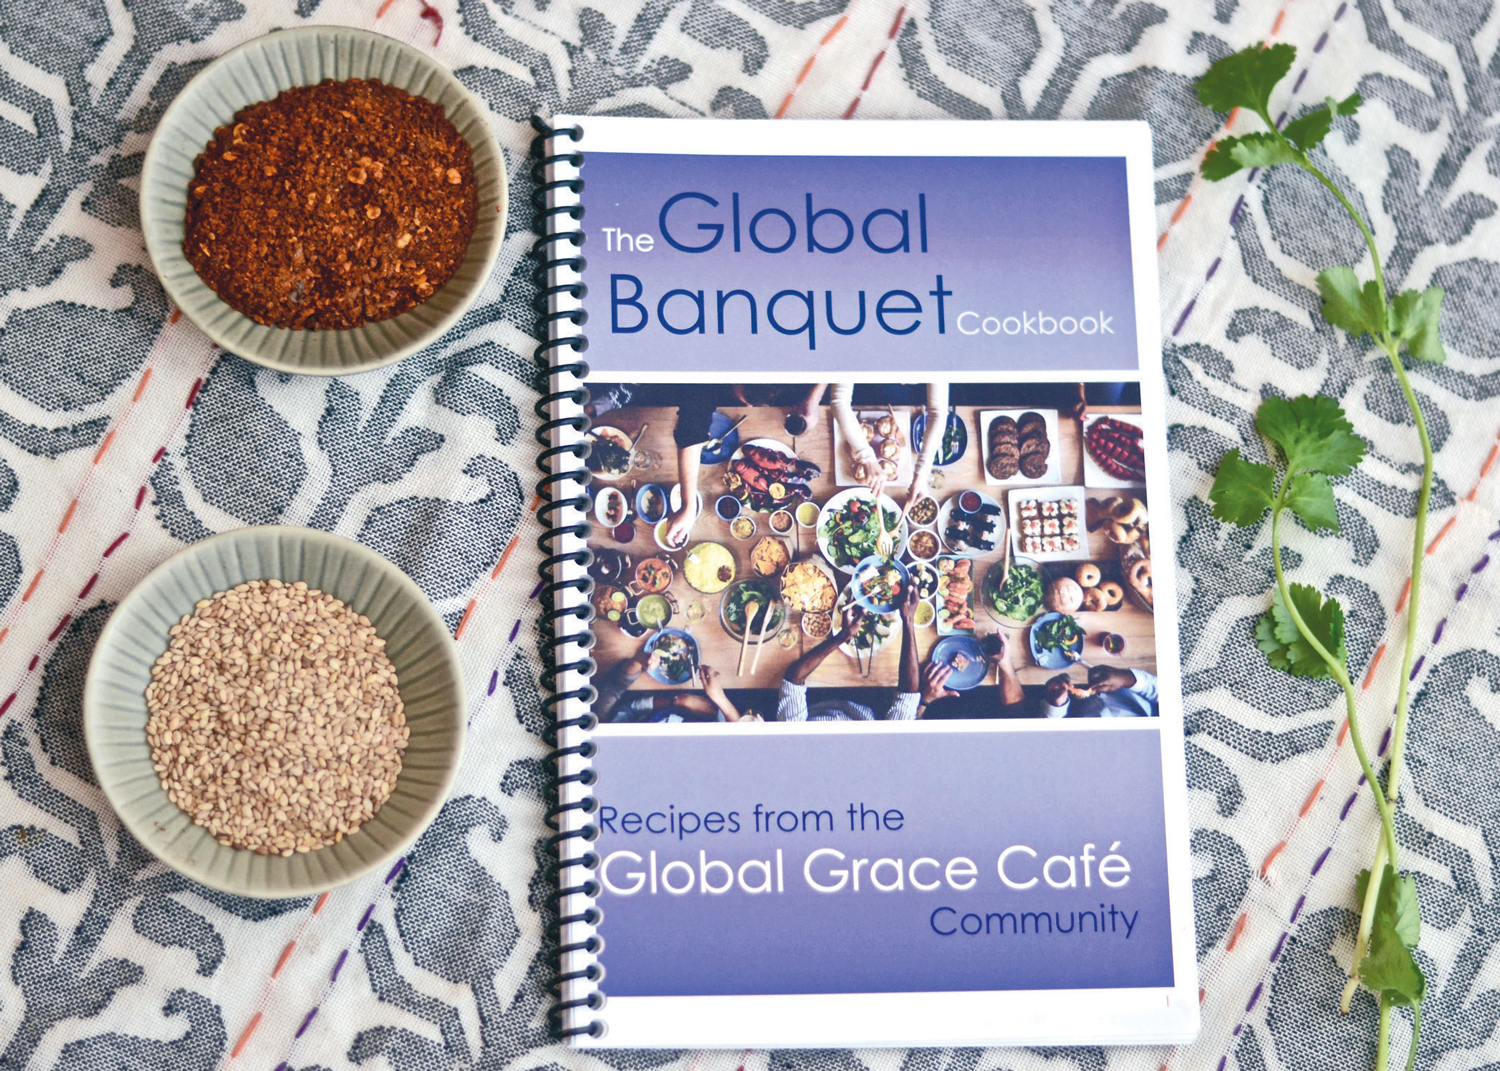 The Global Banquet Cookbook